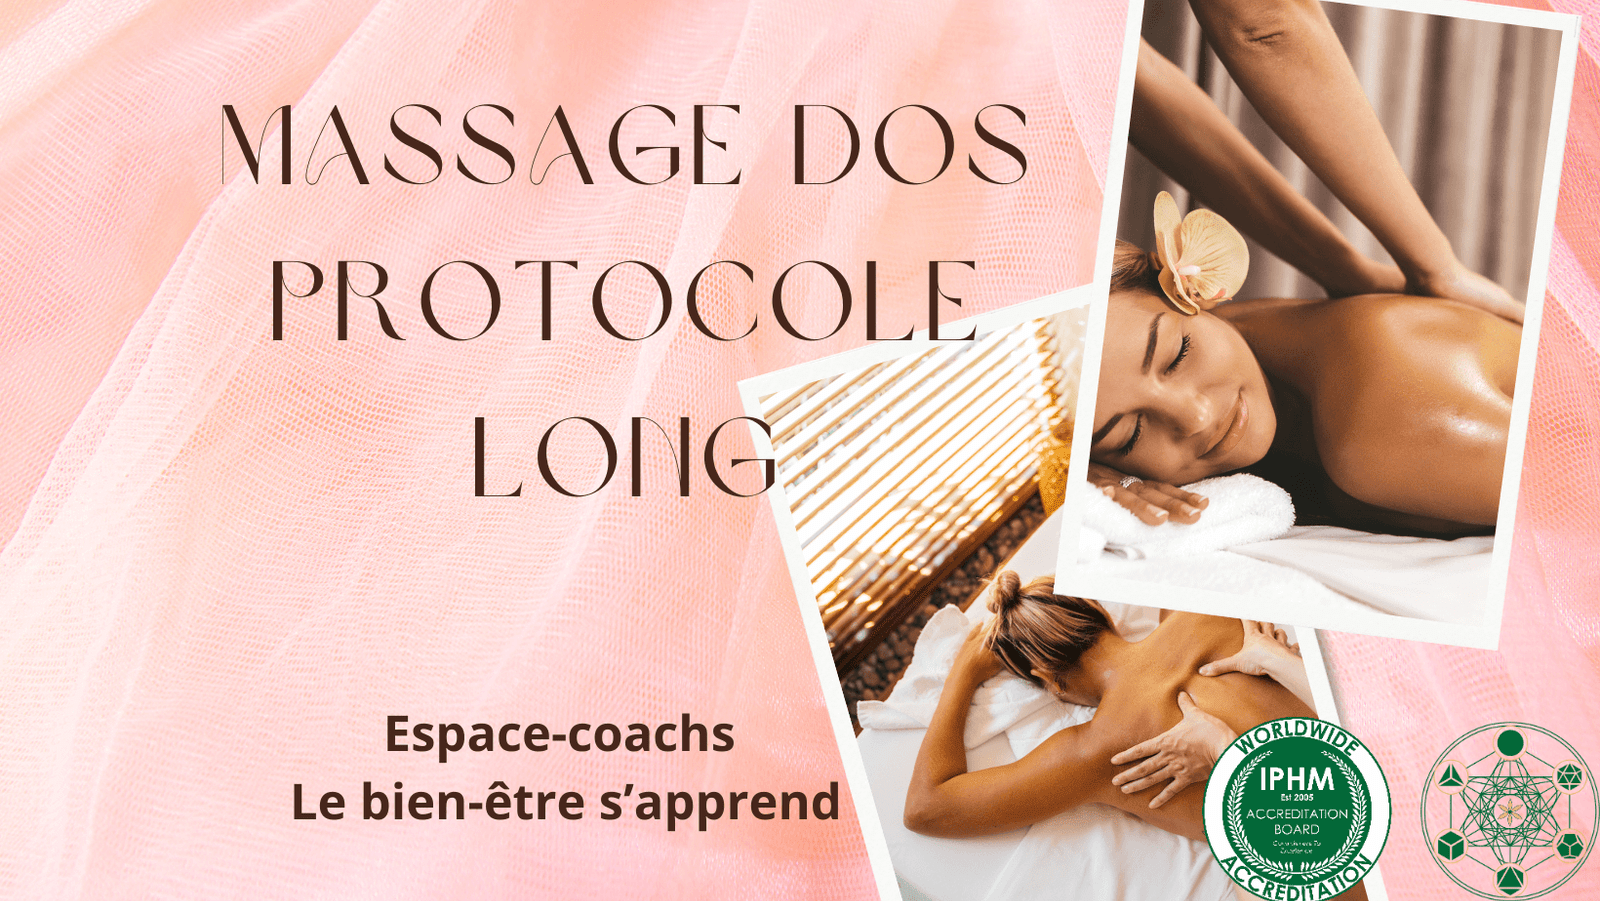 Massage dos - protocole long : formation certifiante 15/8/24